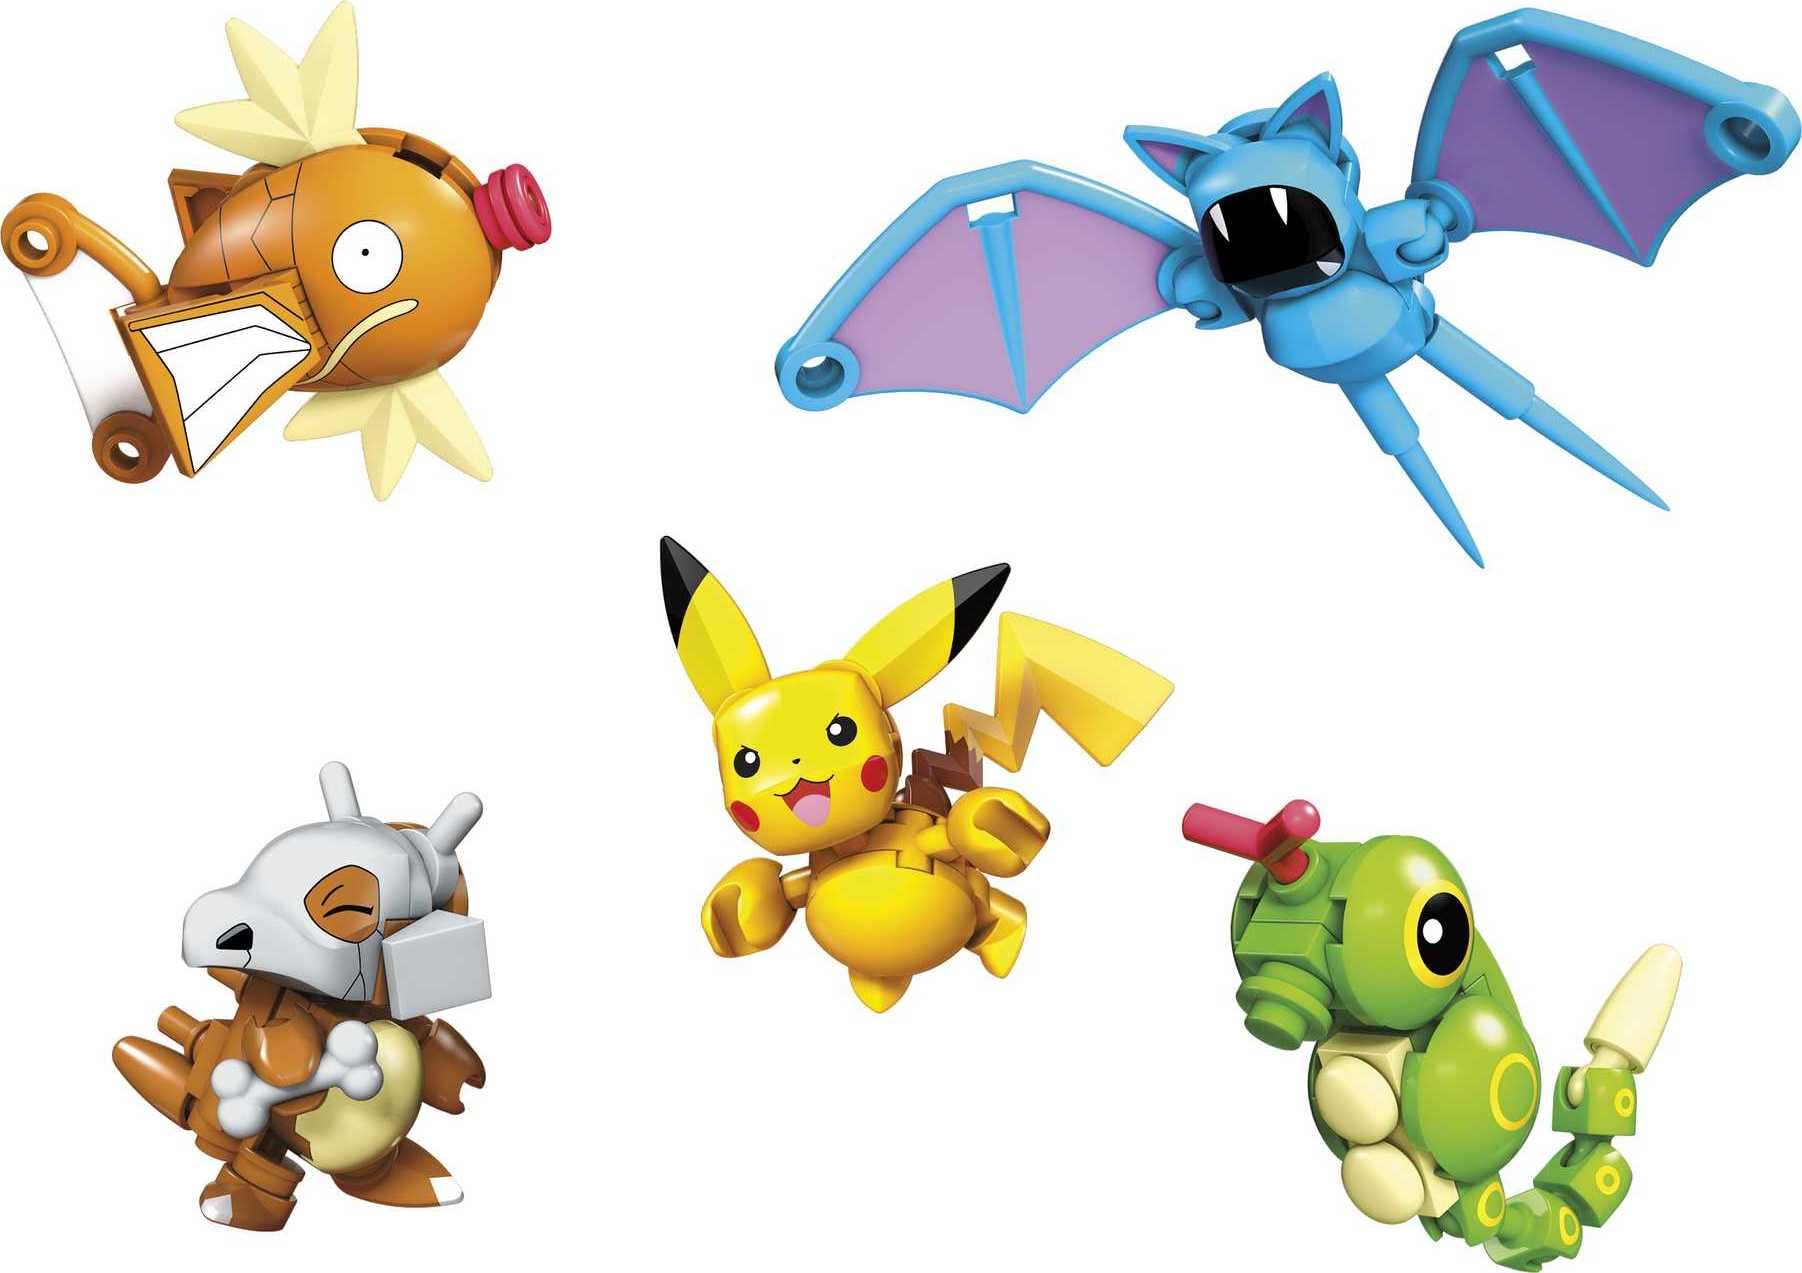 MEGA Pokémon Action Figure Building Toys Set for Kids, Poké Ball Bundle with 118 Pieces, 5 Poseable Characters Including Pikachu and More (Amazon Exclusive)